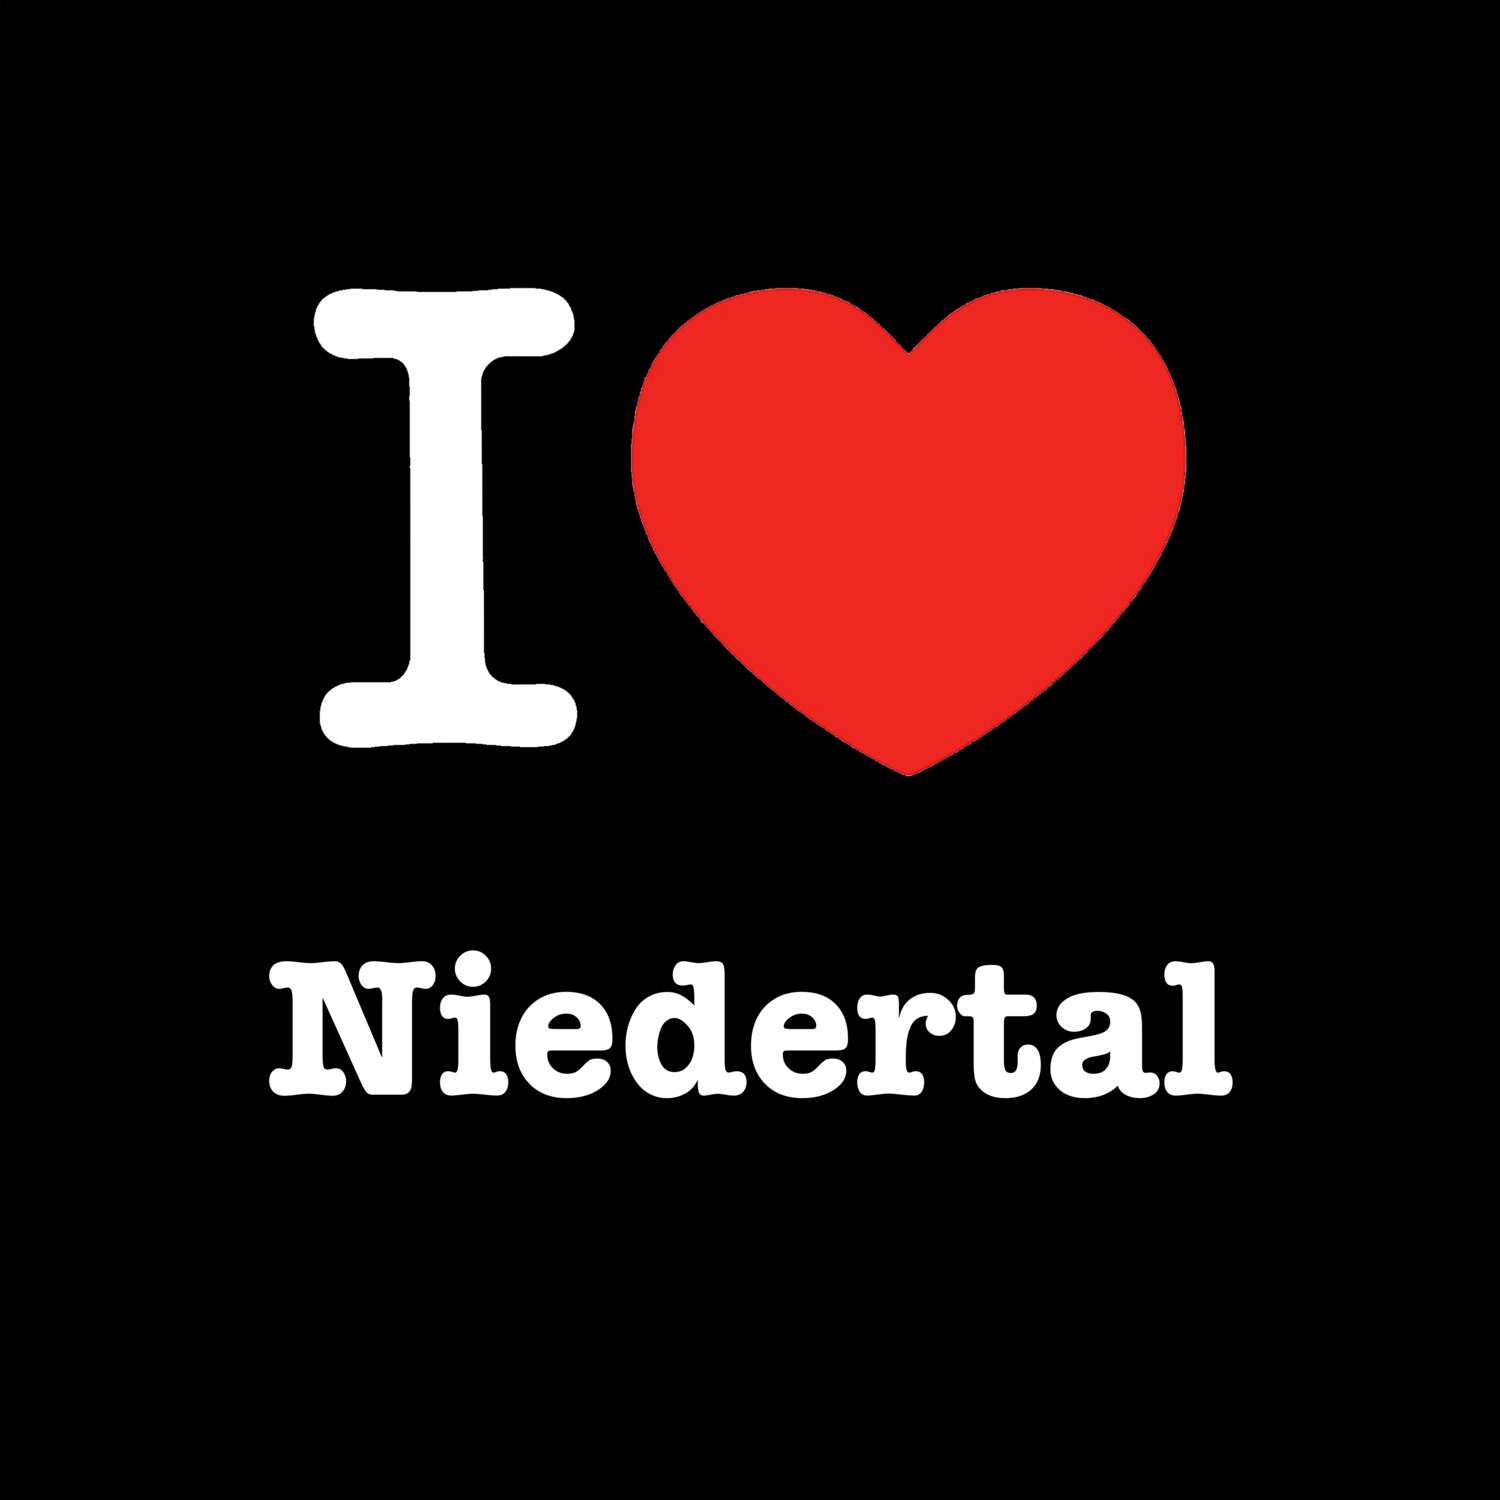 Niedertal T-Shirt »I love«